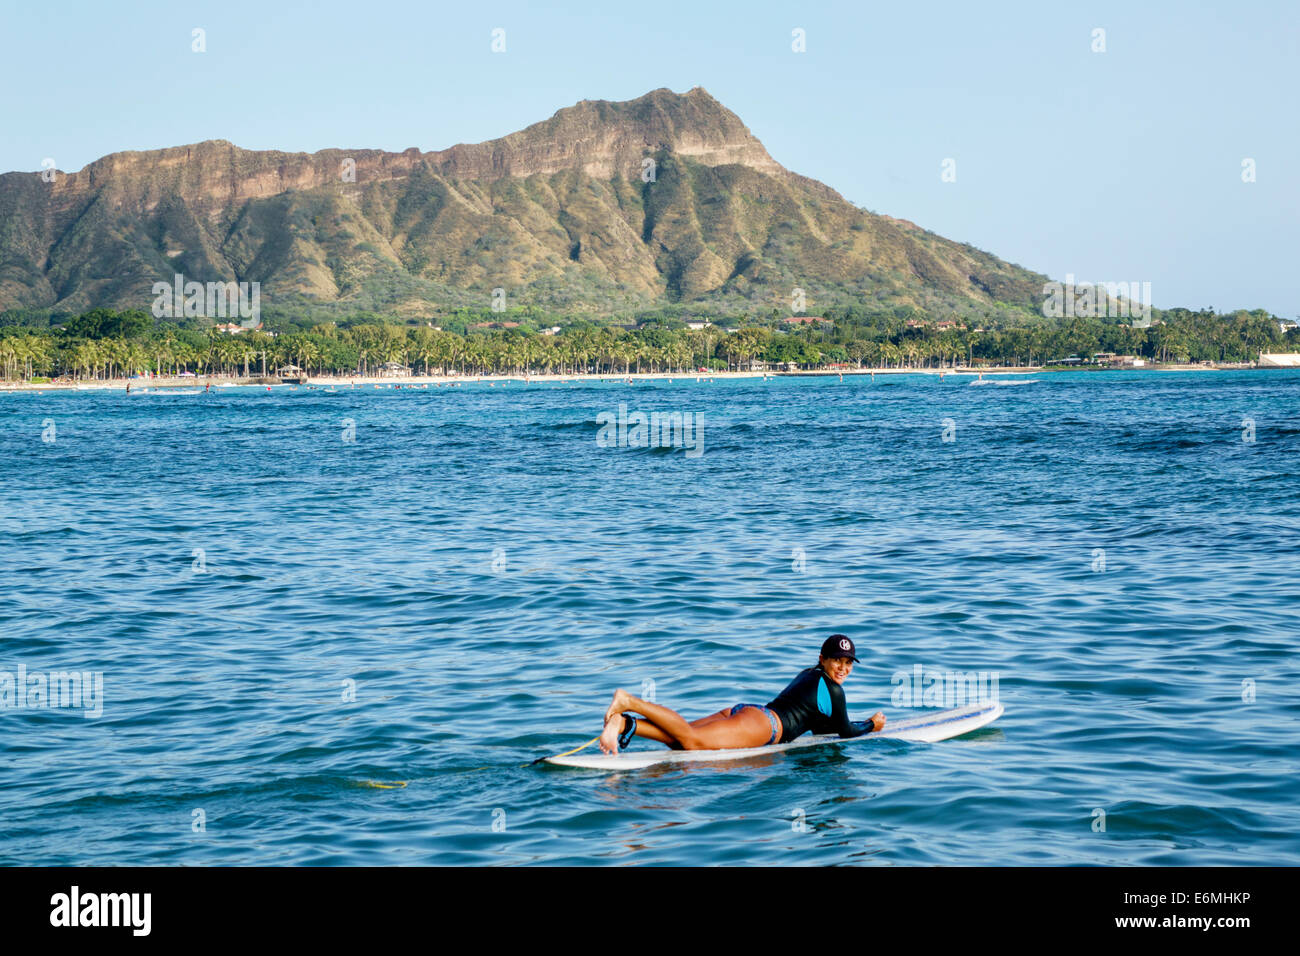 Honolulu Waikiki Beach Hawaii,Hawaiian,Oahu,Pacific Ocean,Waikiki Bay,Diamond Head Crater,extinct volcano,mountain,woman female women,surfer,surfboard Stock Photo